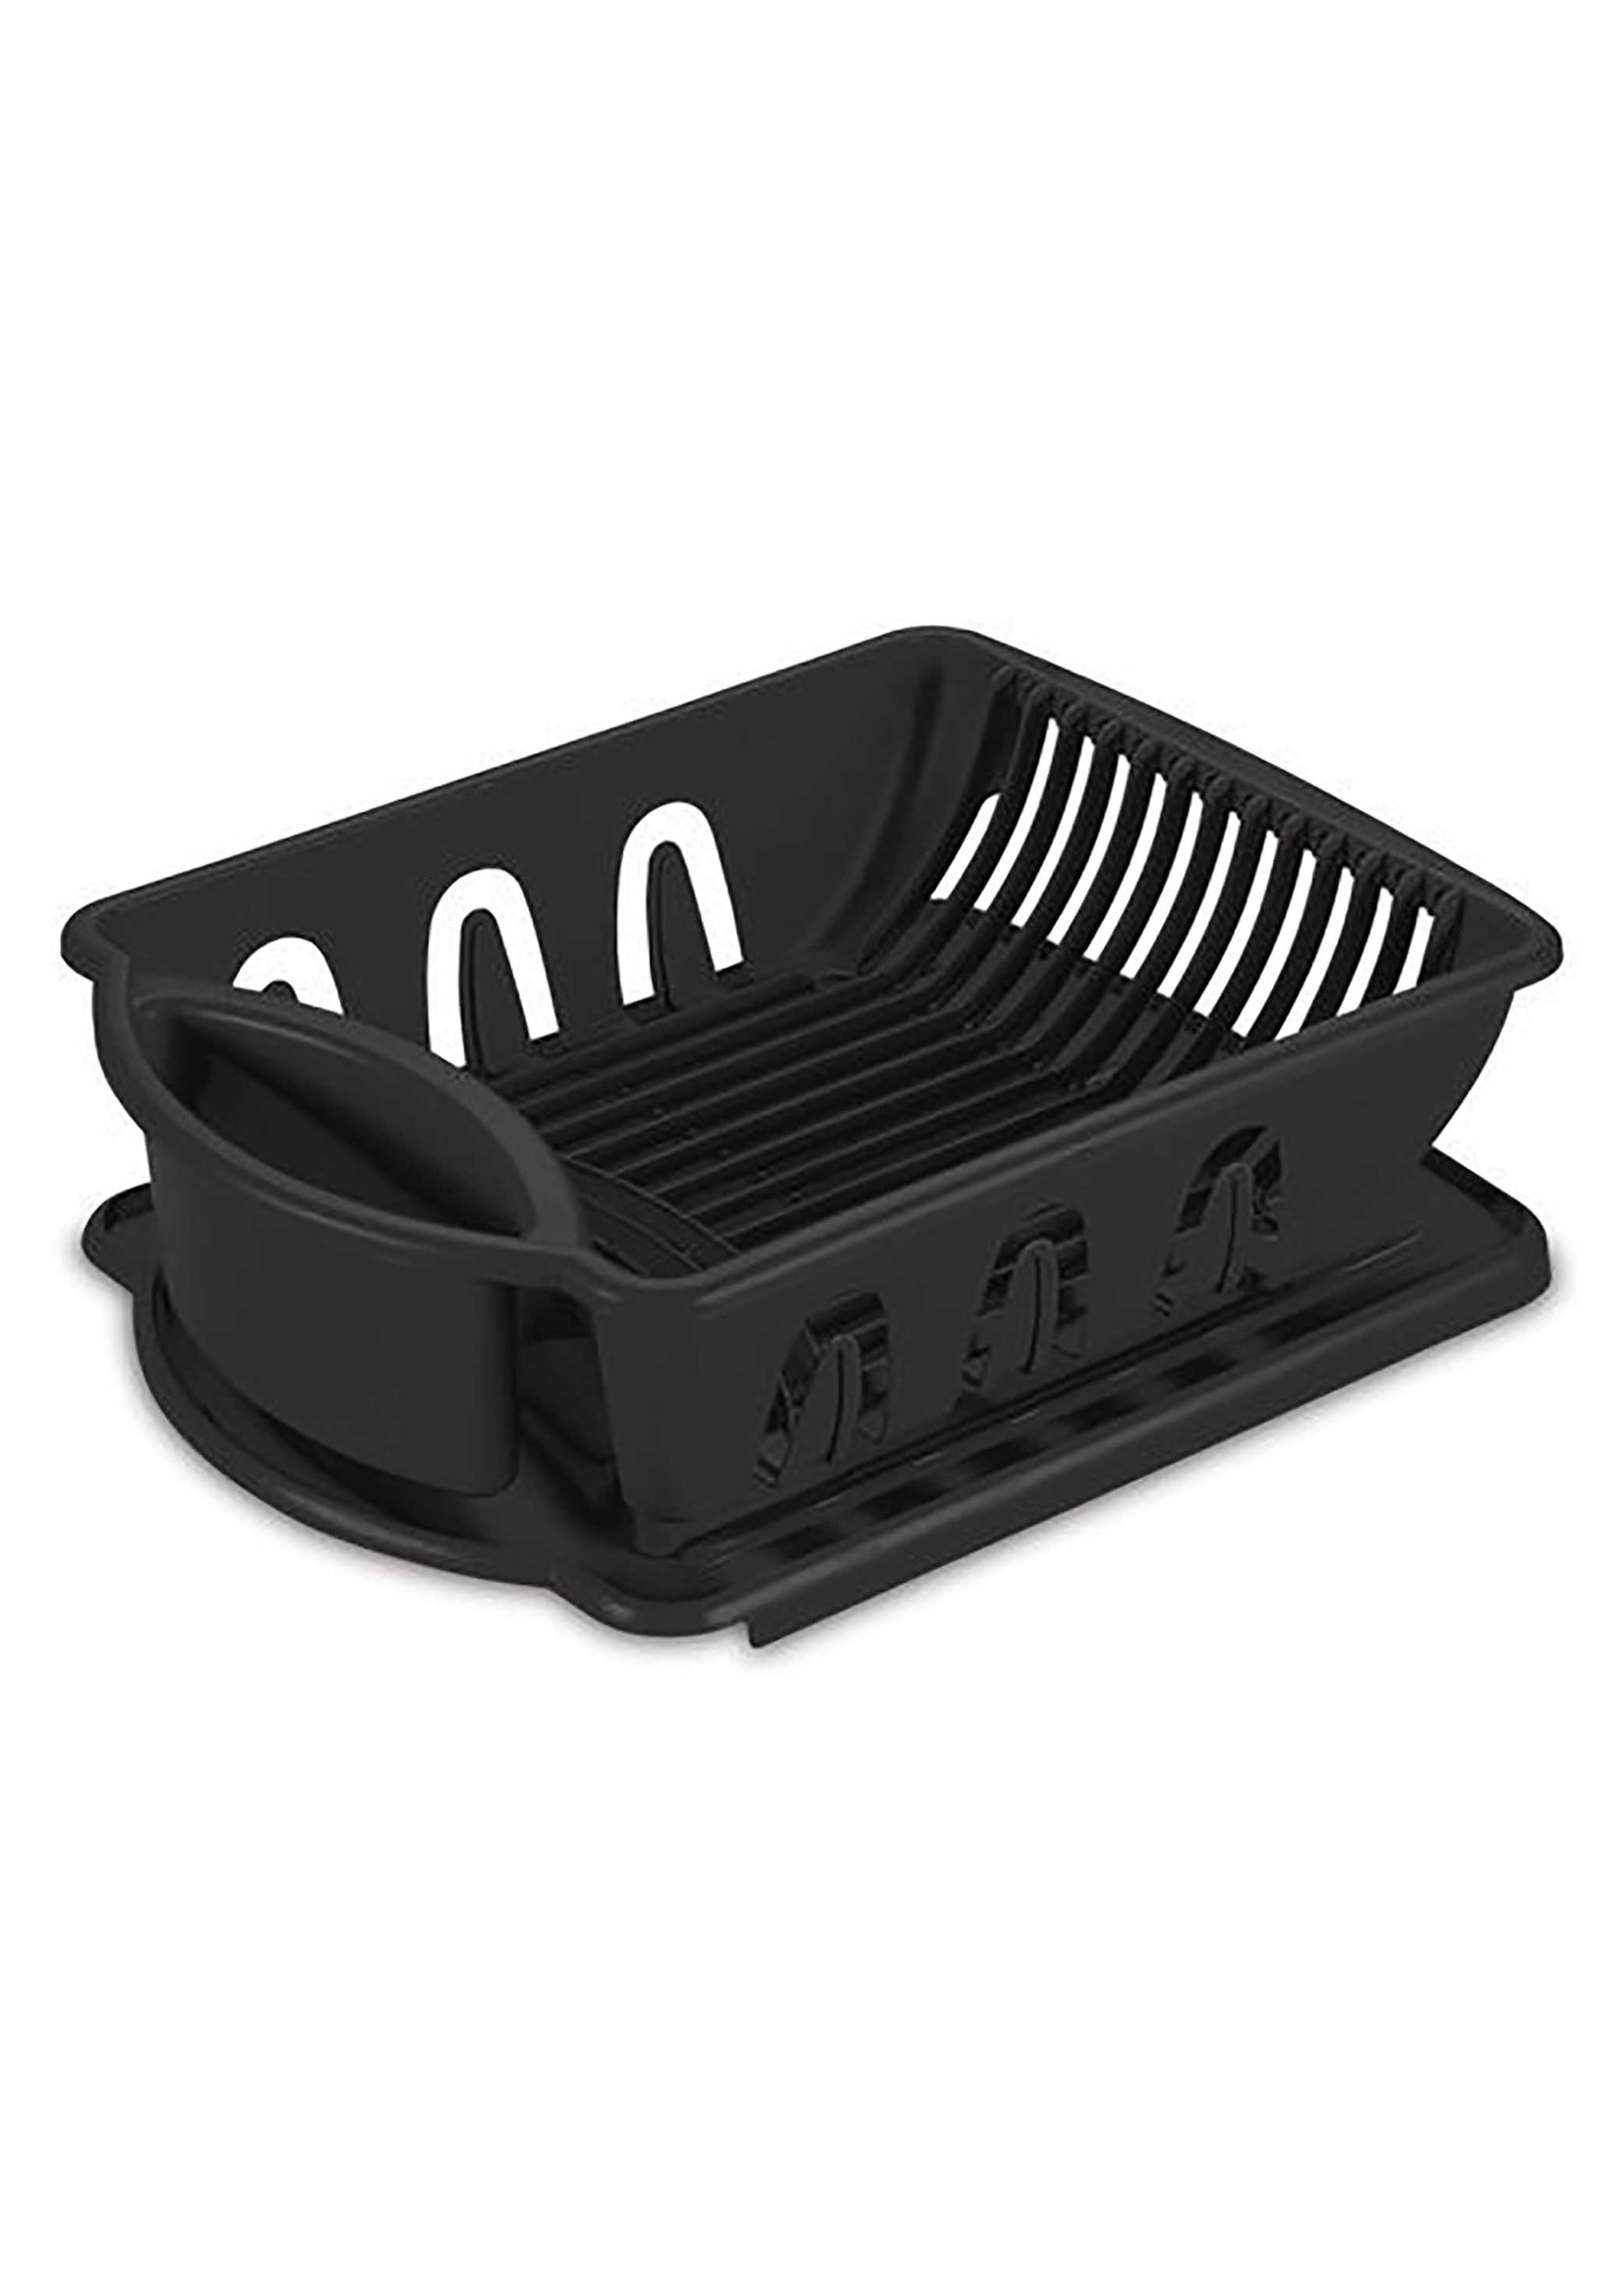 B2 FASHIONS INC STERILITE Black Large Dish Rack with Tray